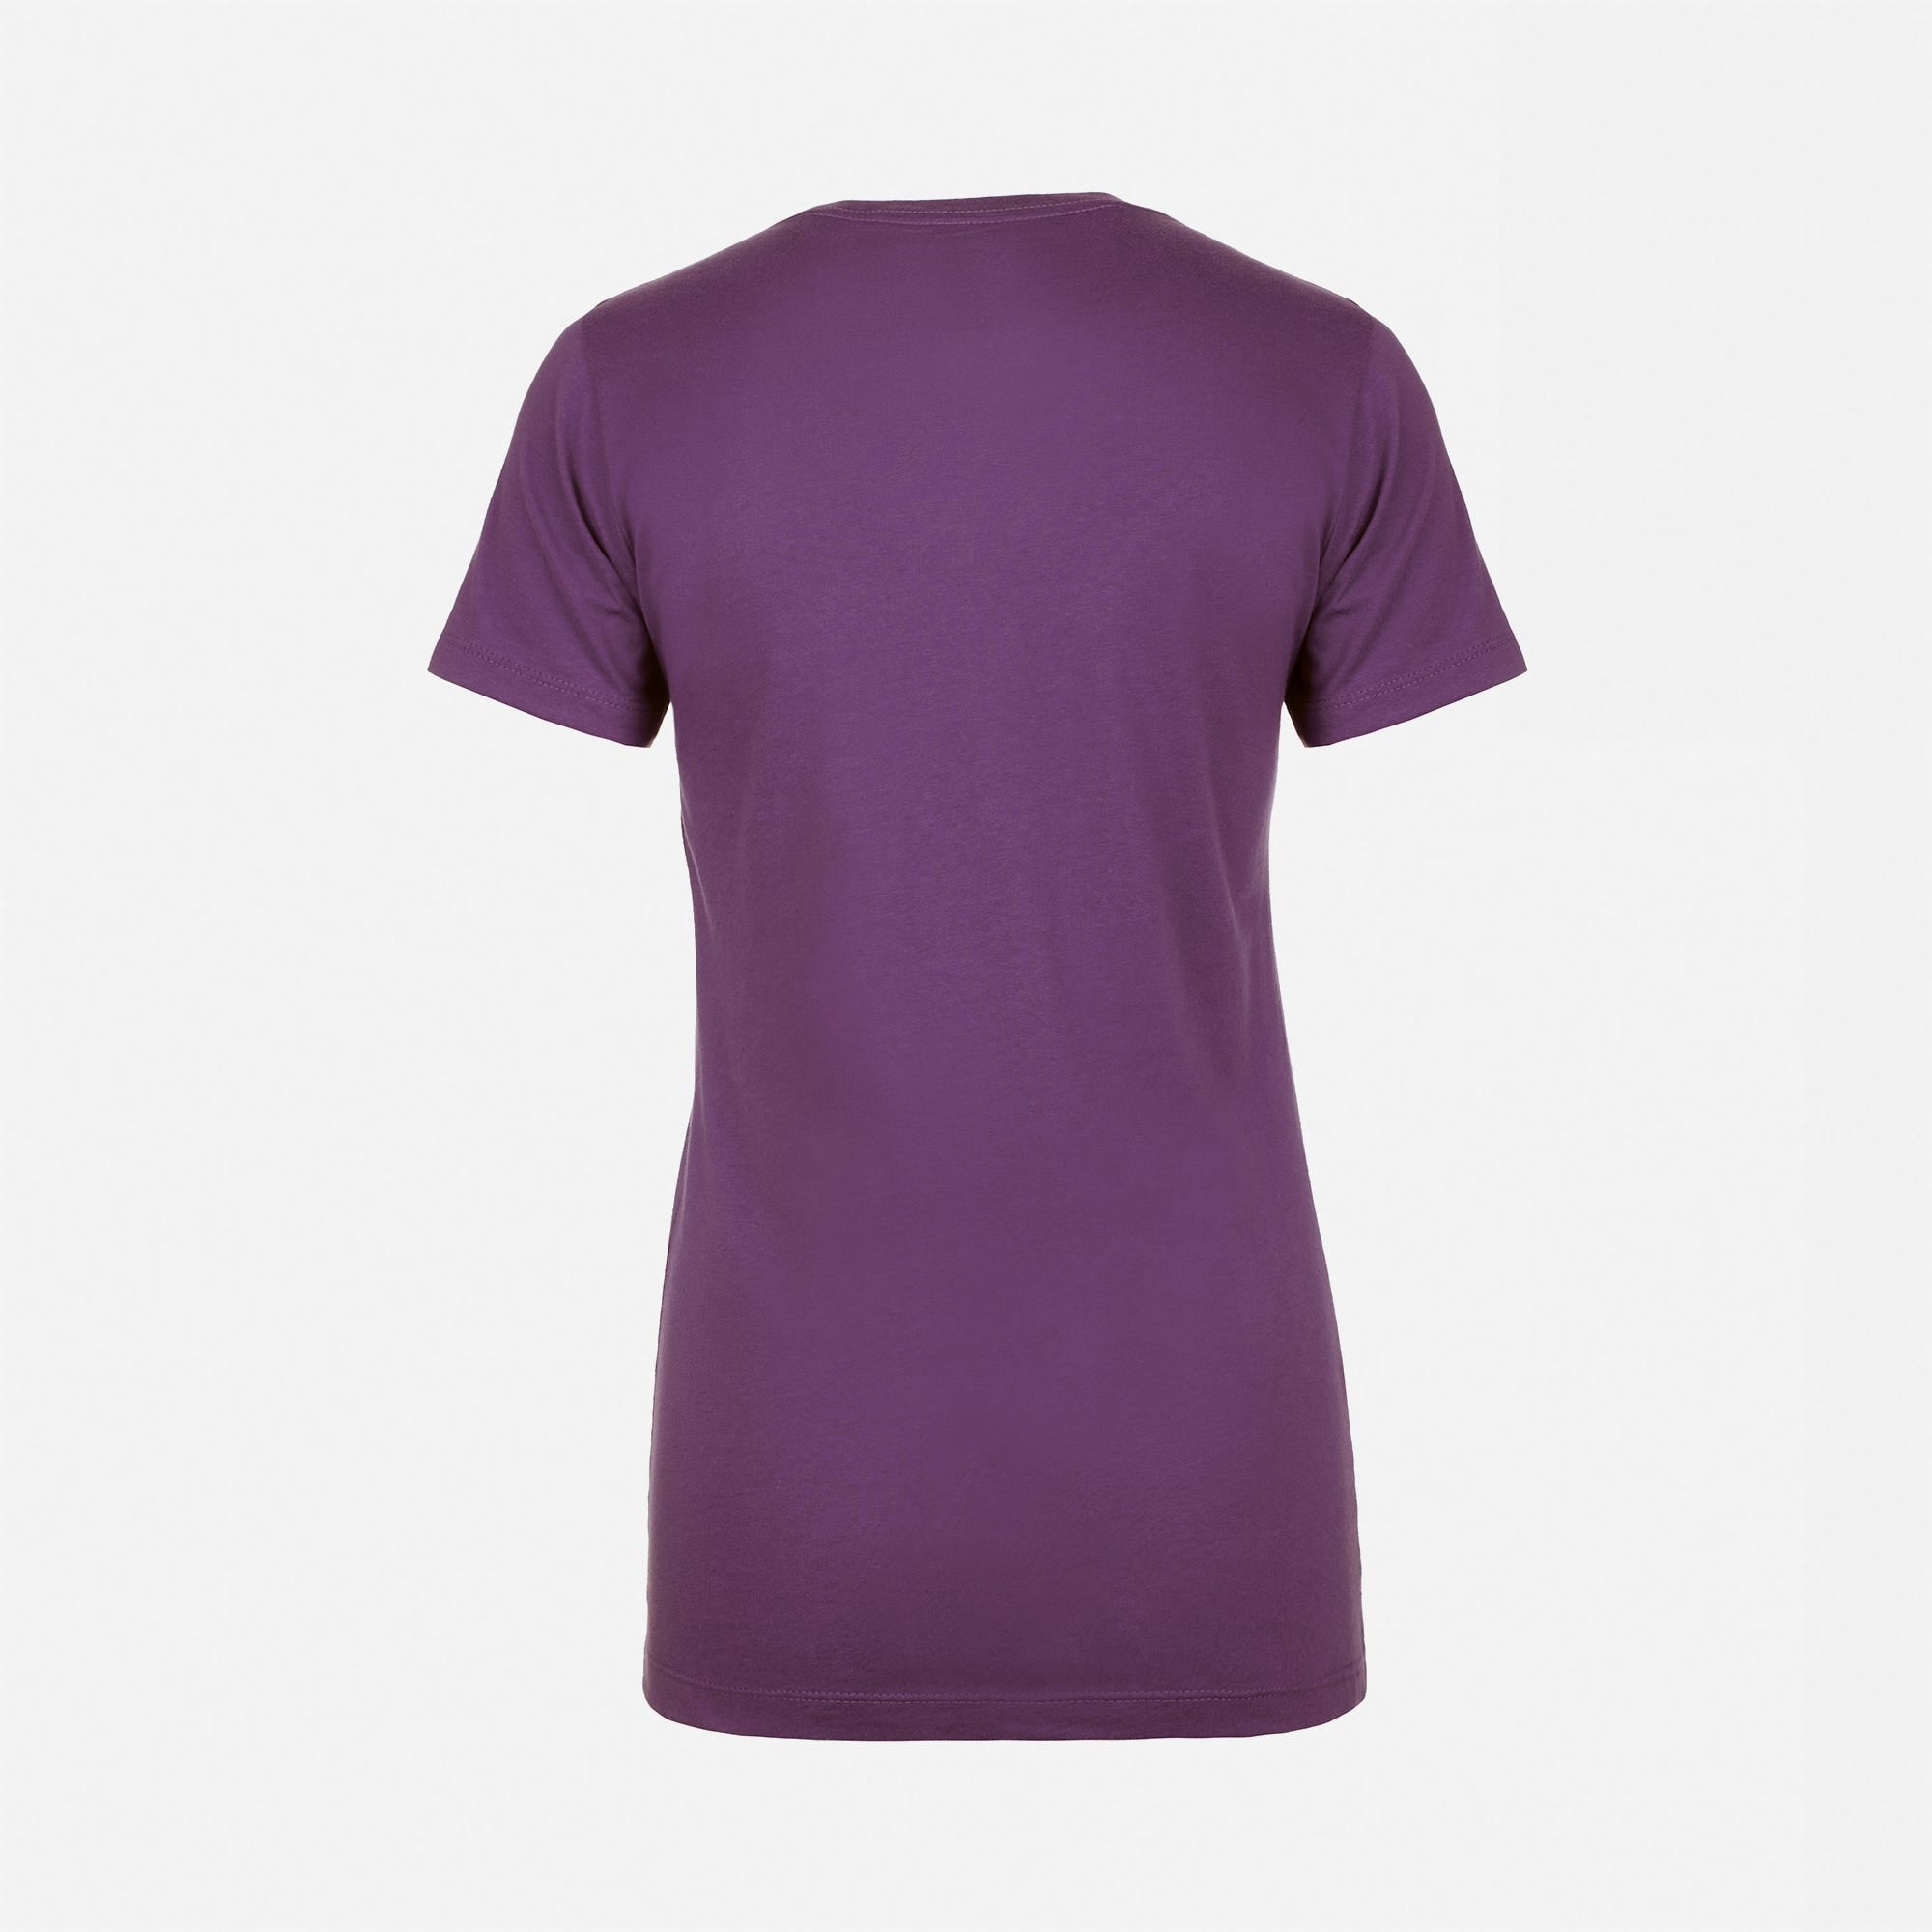 Cotton Boyfriend T-Shirt Purple Rush 3900 Next Level Apparel Sample Back View